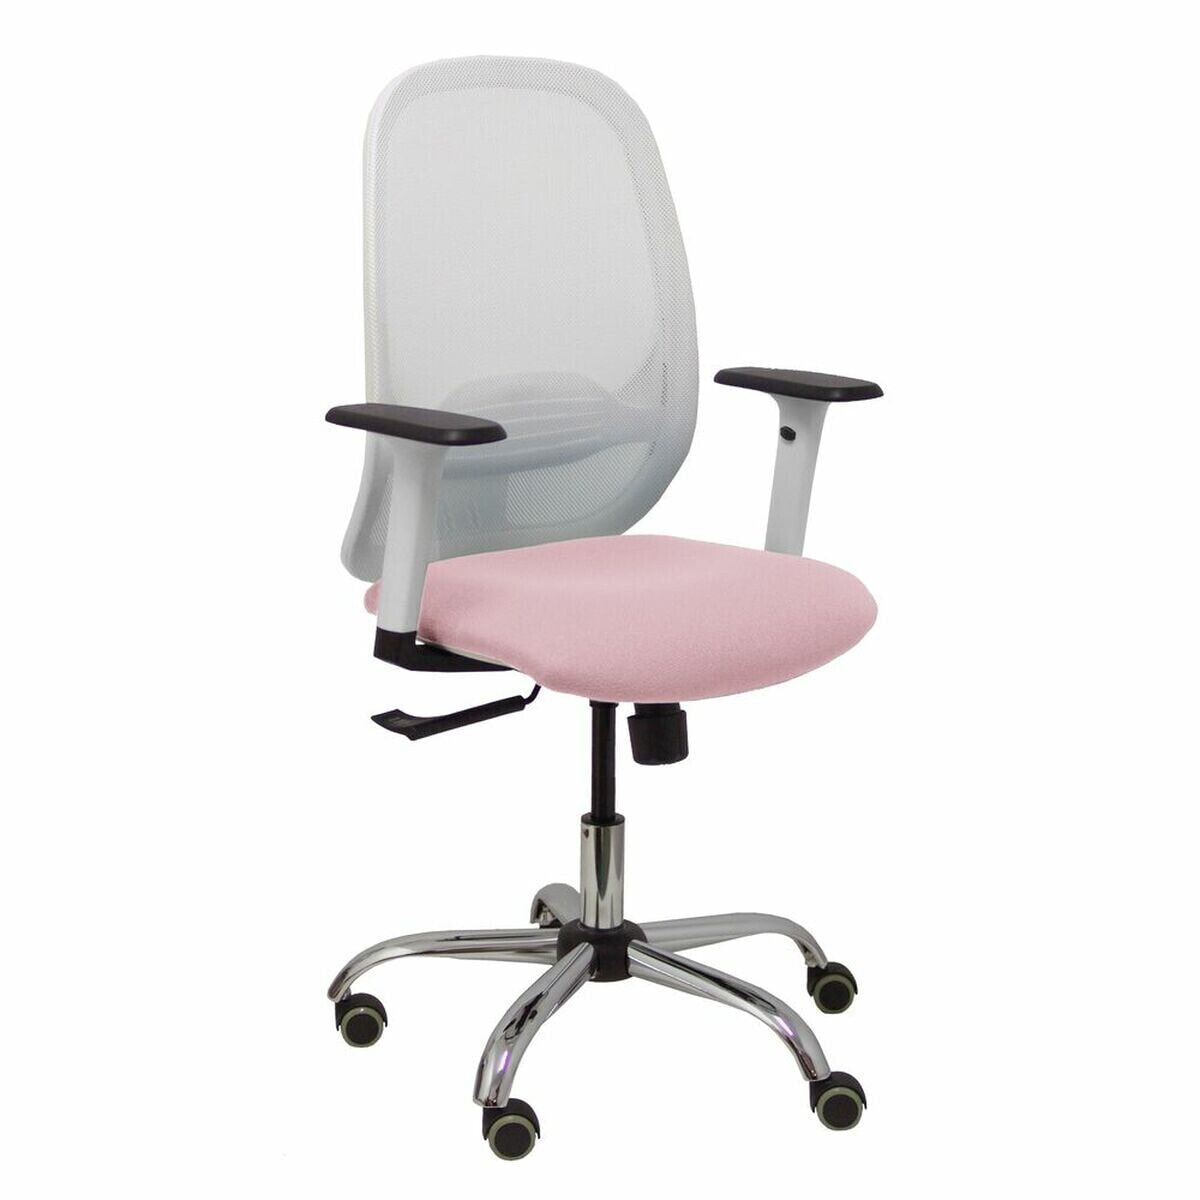 Office Chair Cilanco P&C 354CRRP White Pink